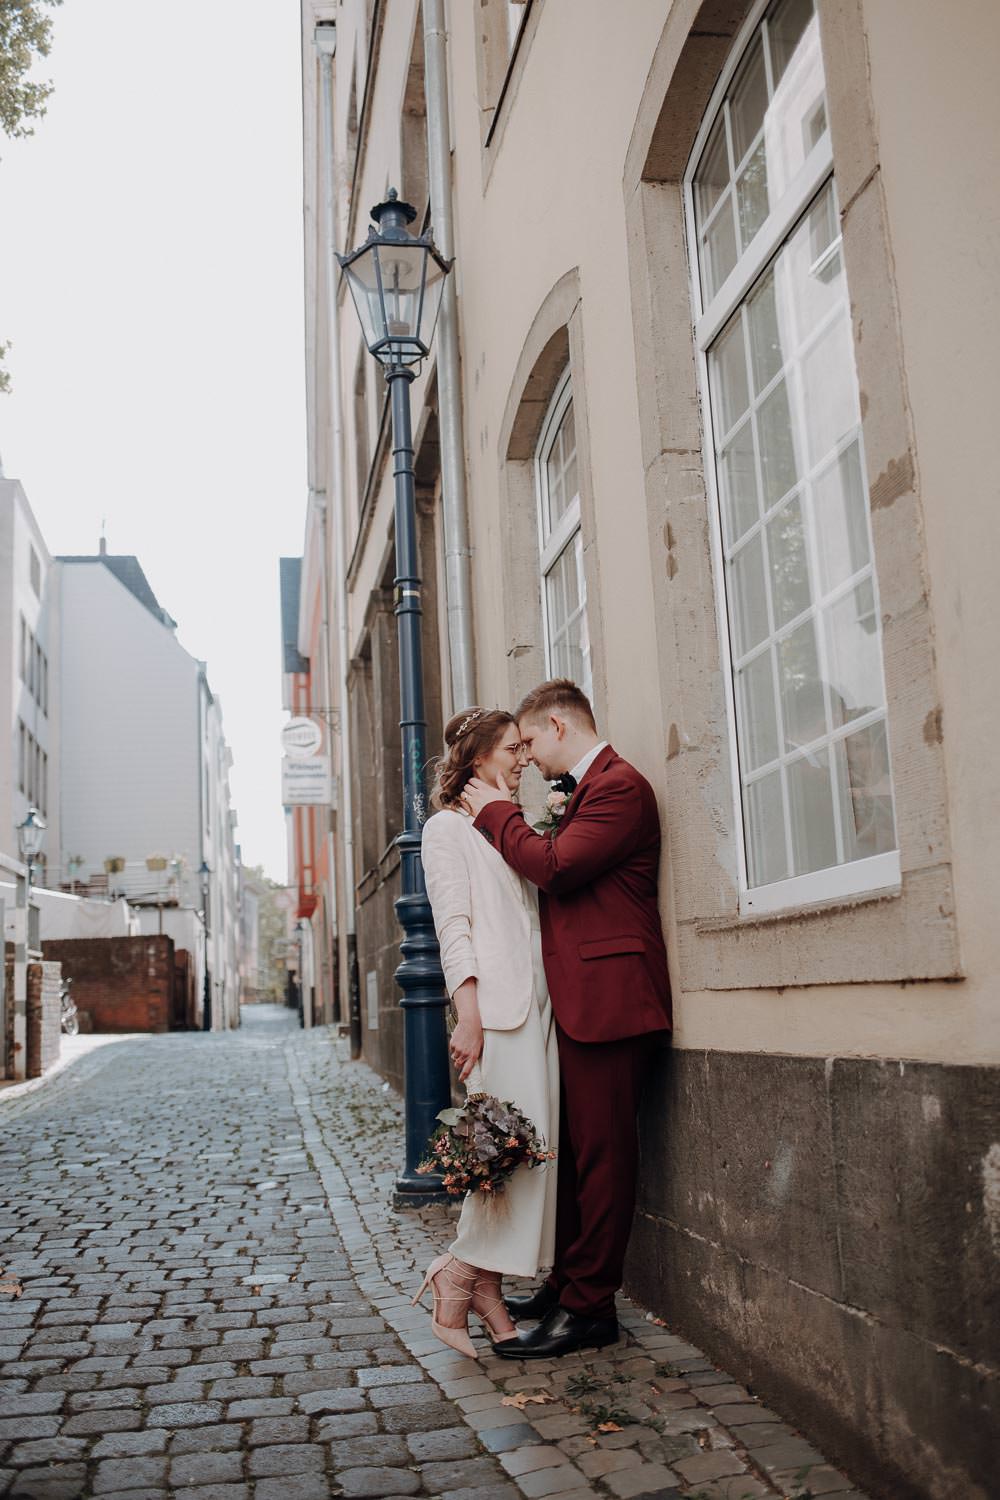 Hochzeitsfotoshooting in der Kölner Altstadt – gesehen bei frauimmer-herrewig.de